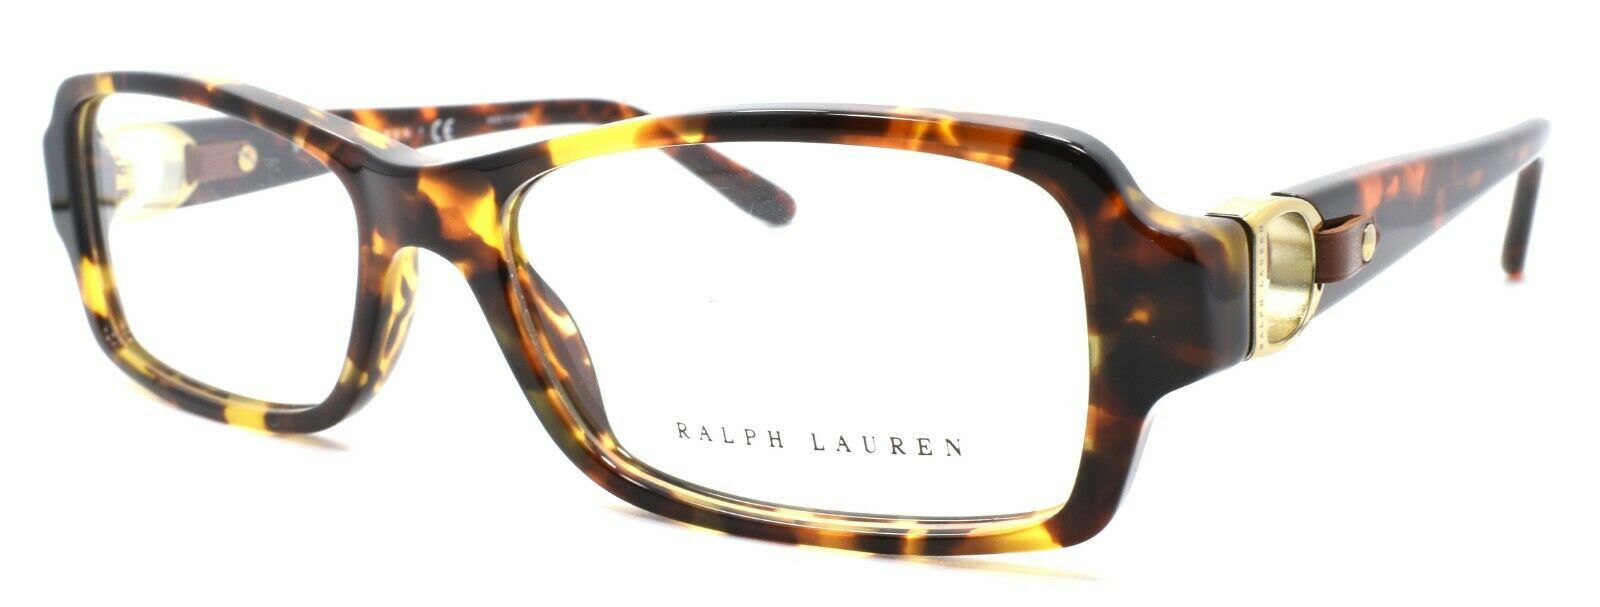 1-Ralph Lauren RL6107Q 5134 Women's Eyeglasses Frames 53-16-140 Antique Tortoise-8053672068979-IKSpecs